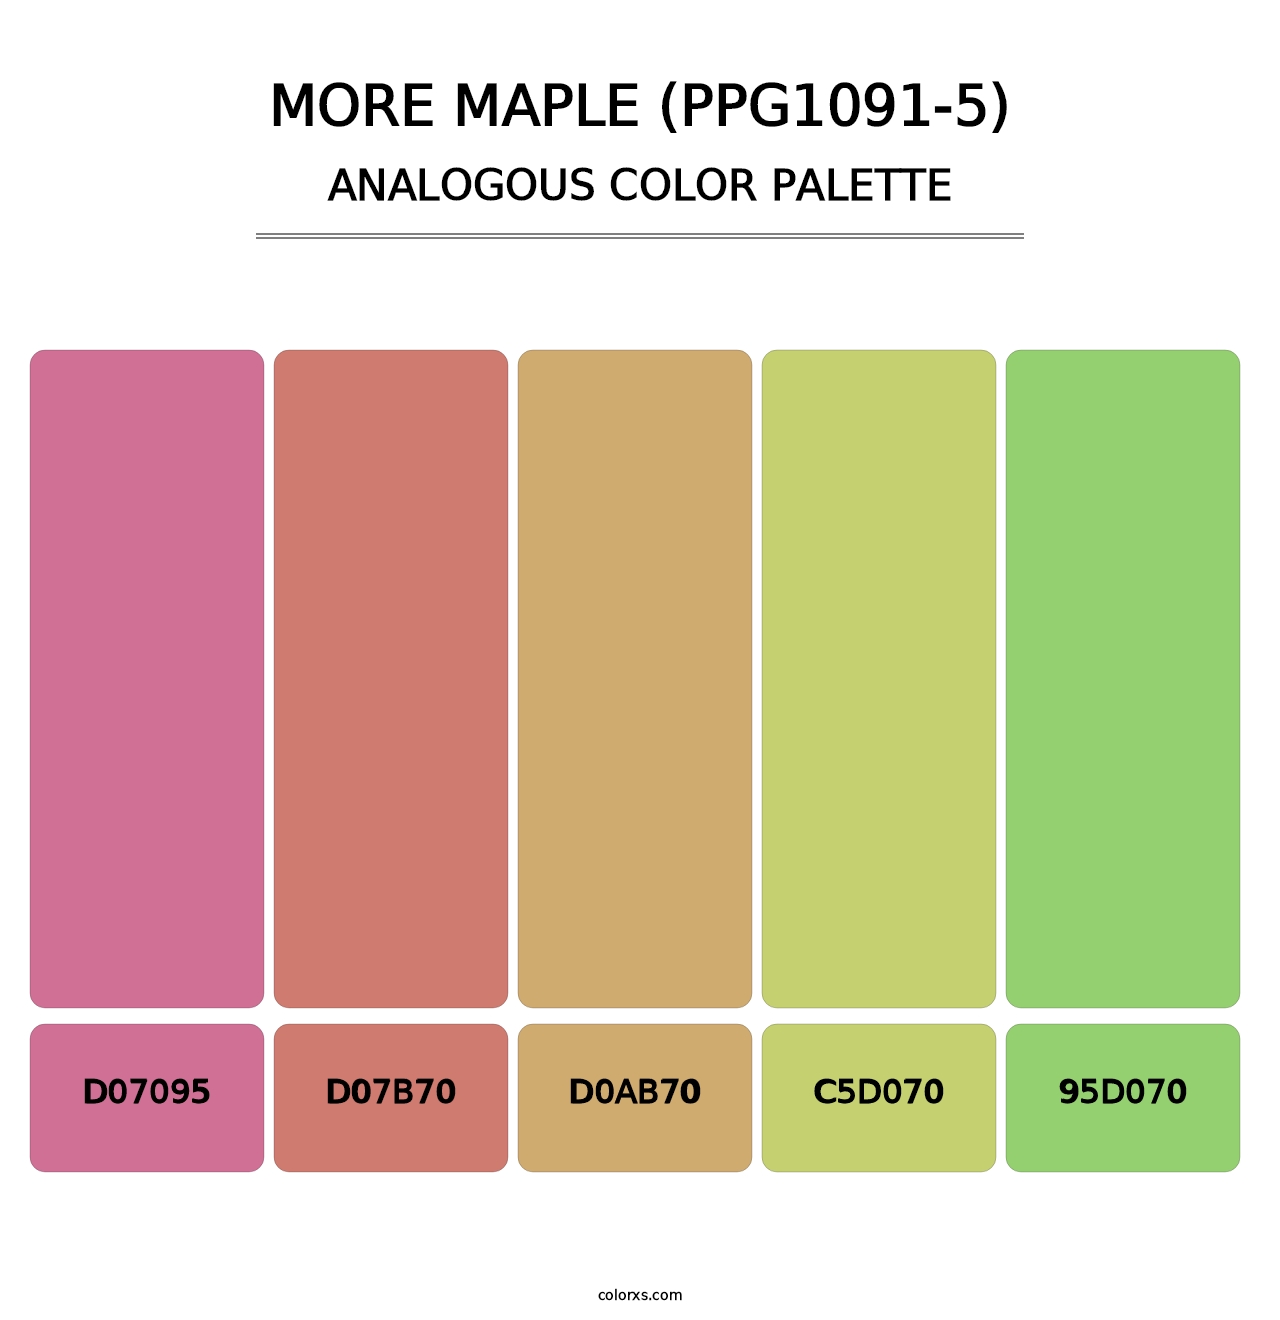 More Maple (PPG1091-5) - Analogous Color Palette